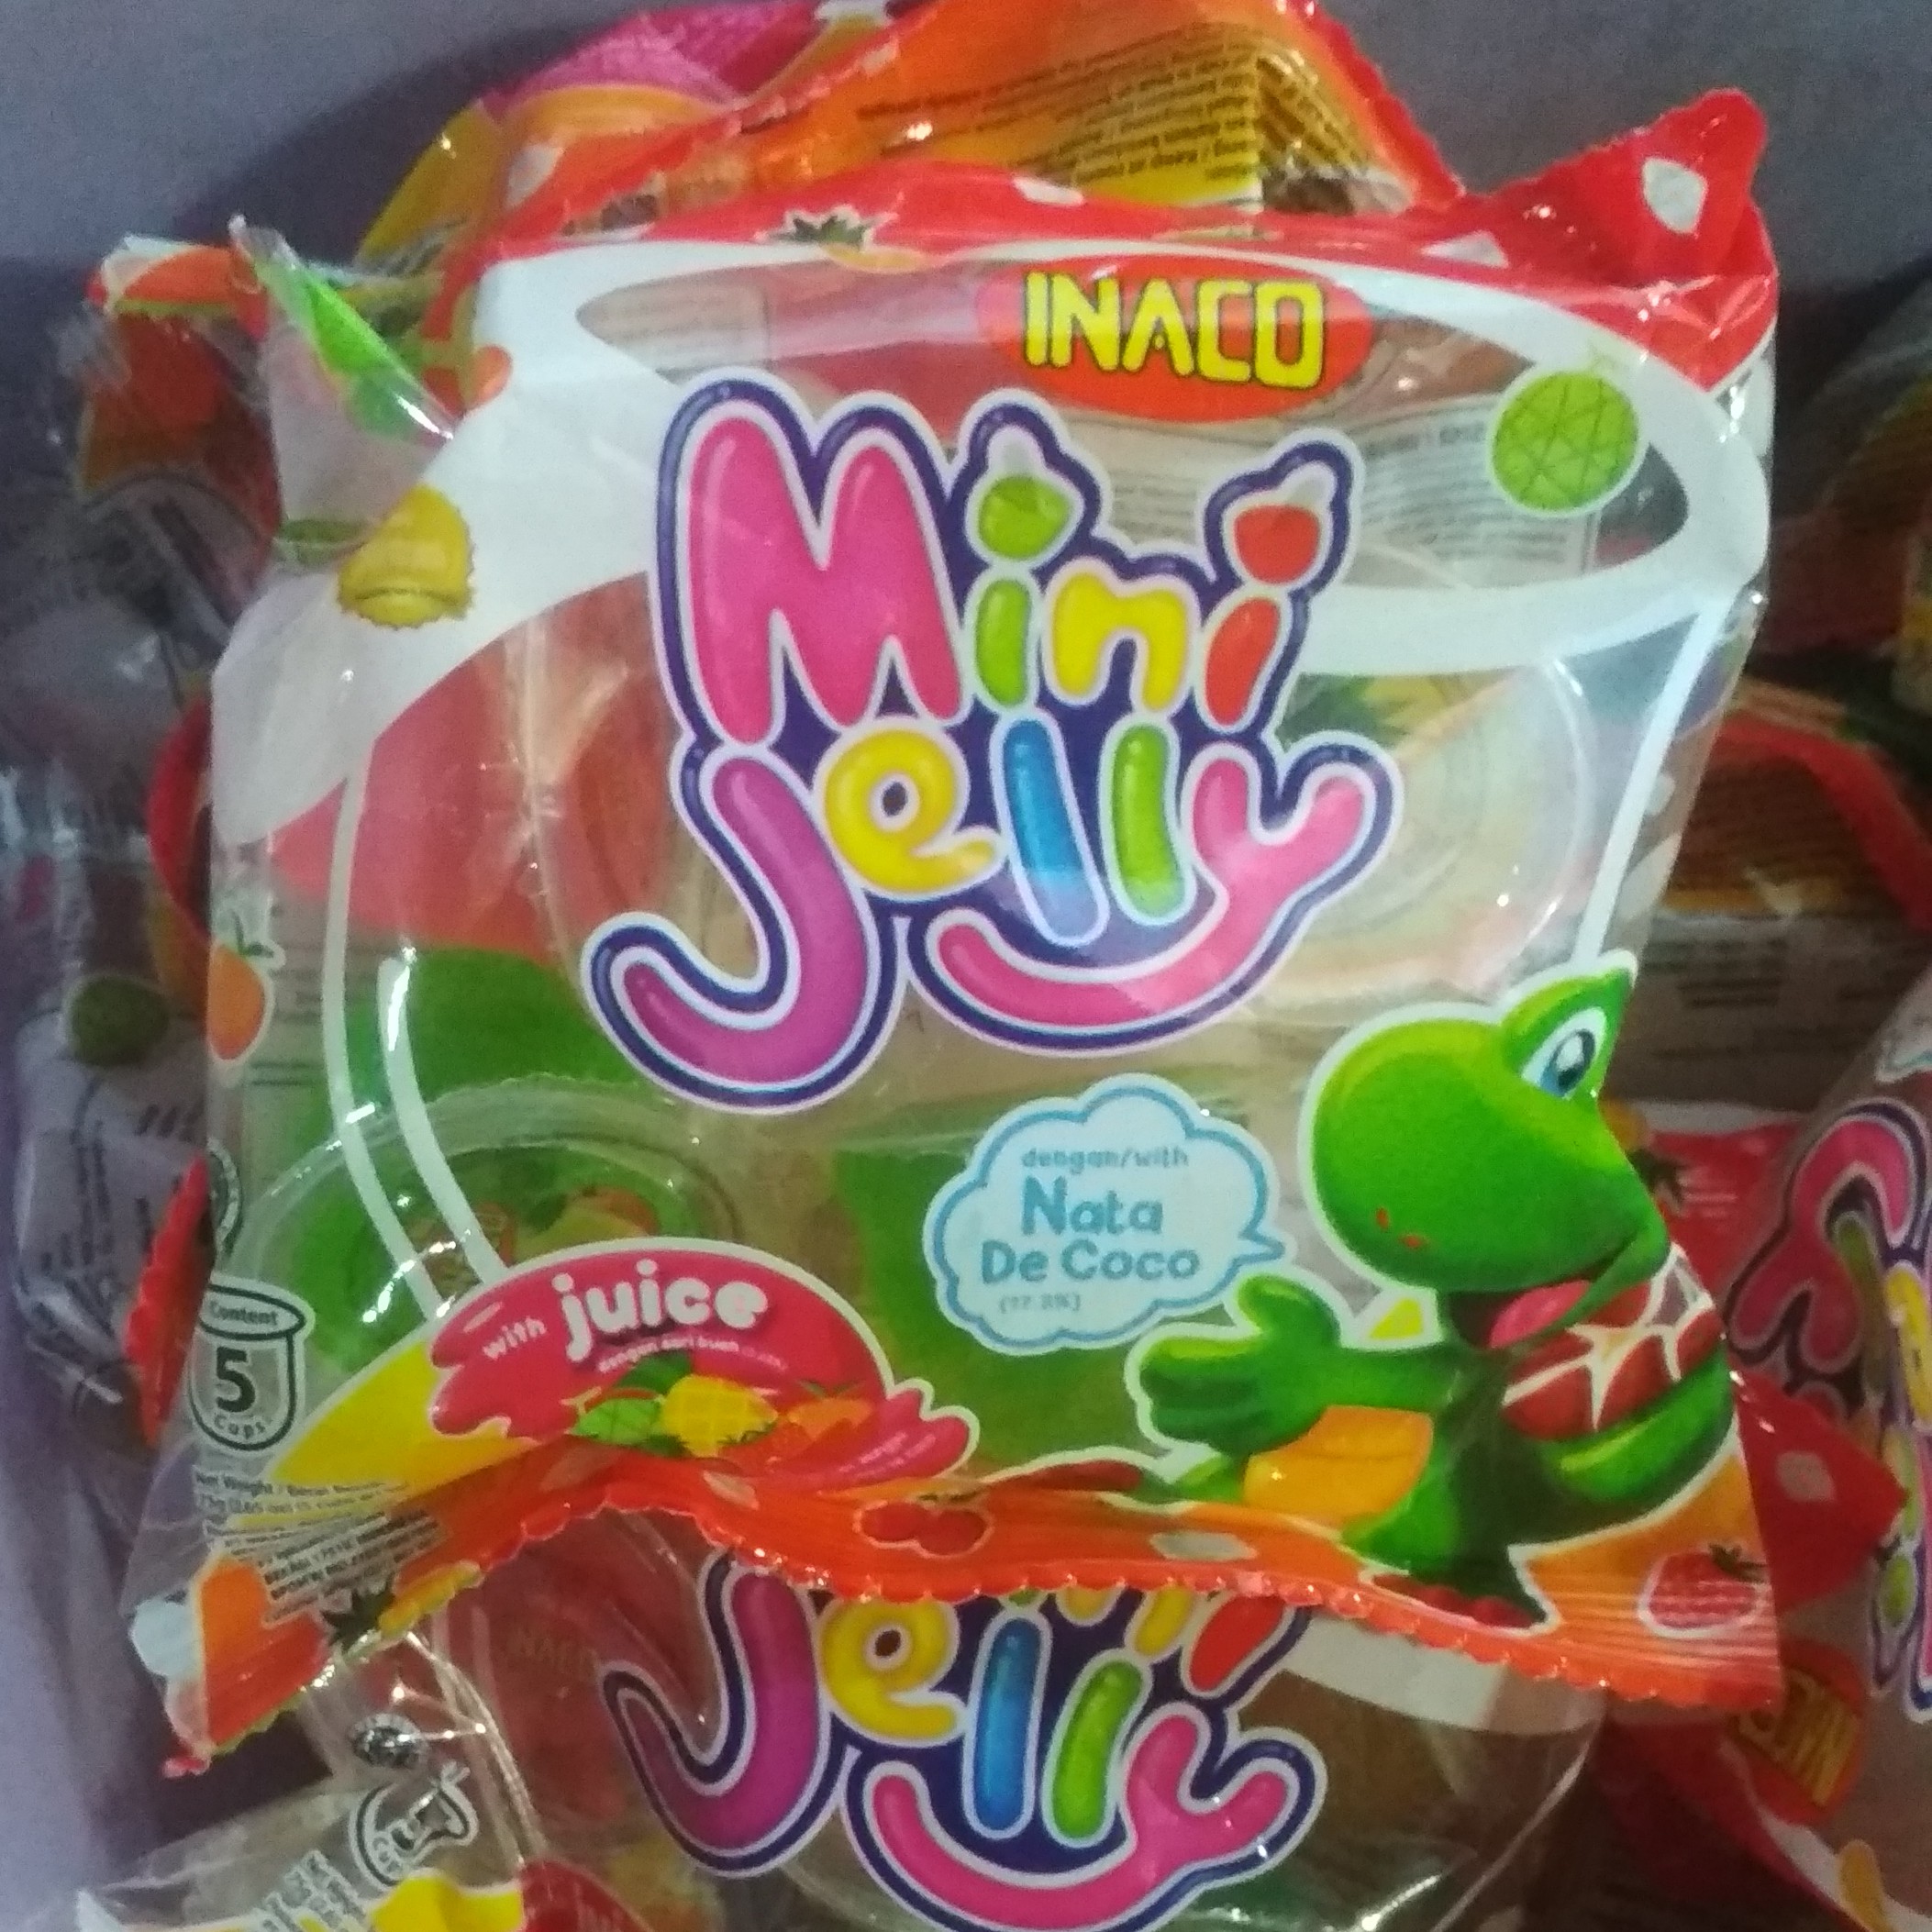 Inaco Jelly